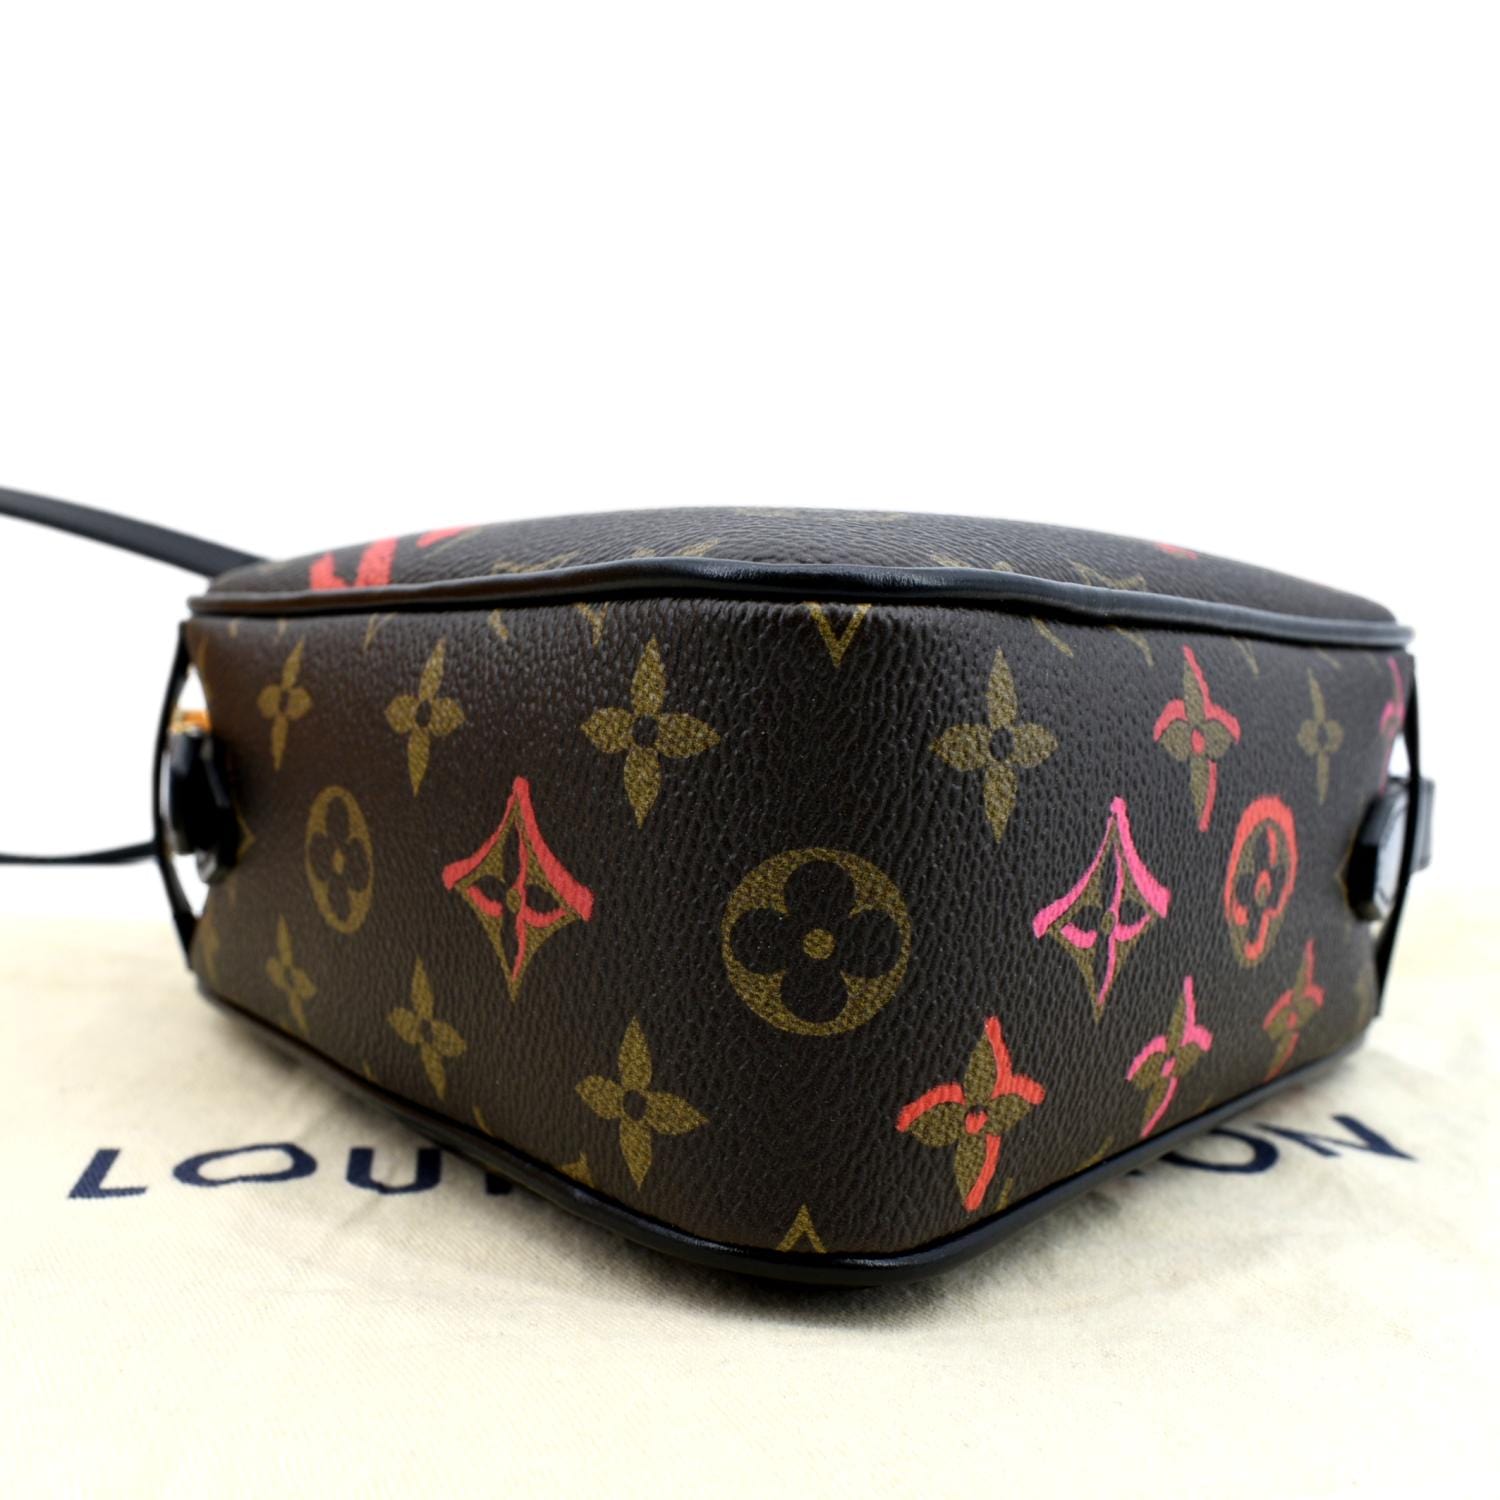 Louis Vuitton Coeur Handbag